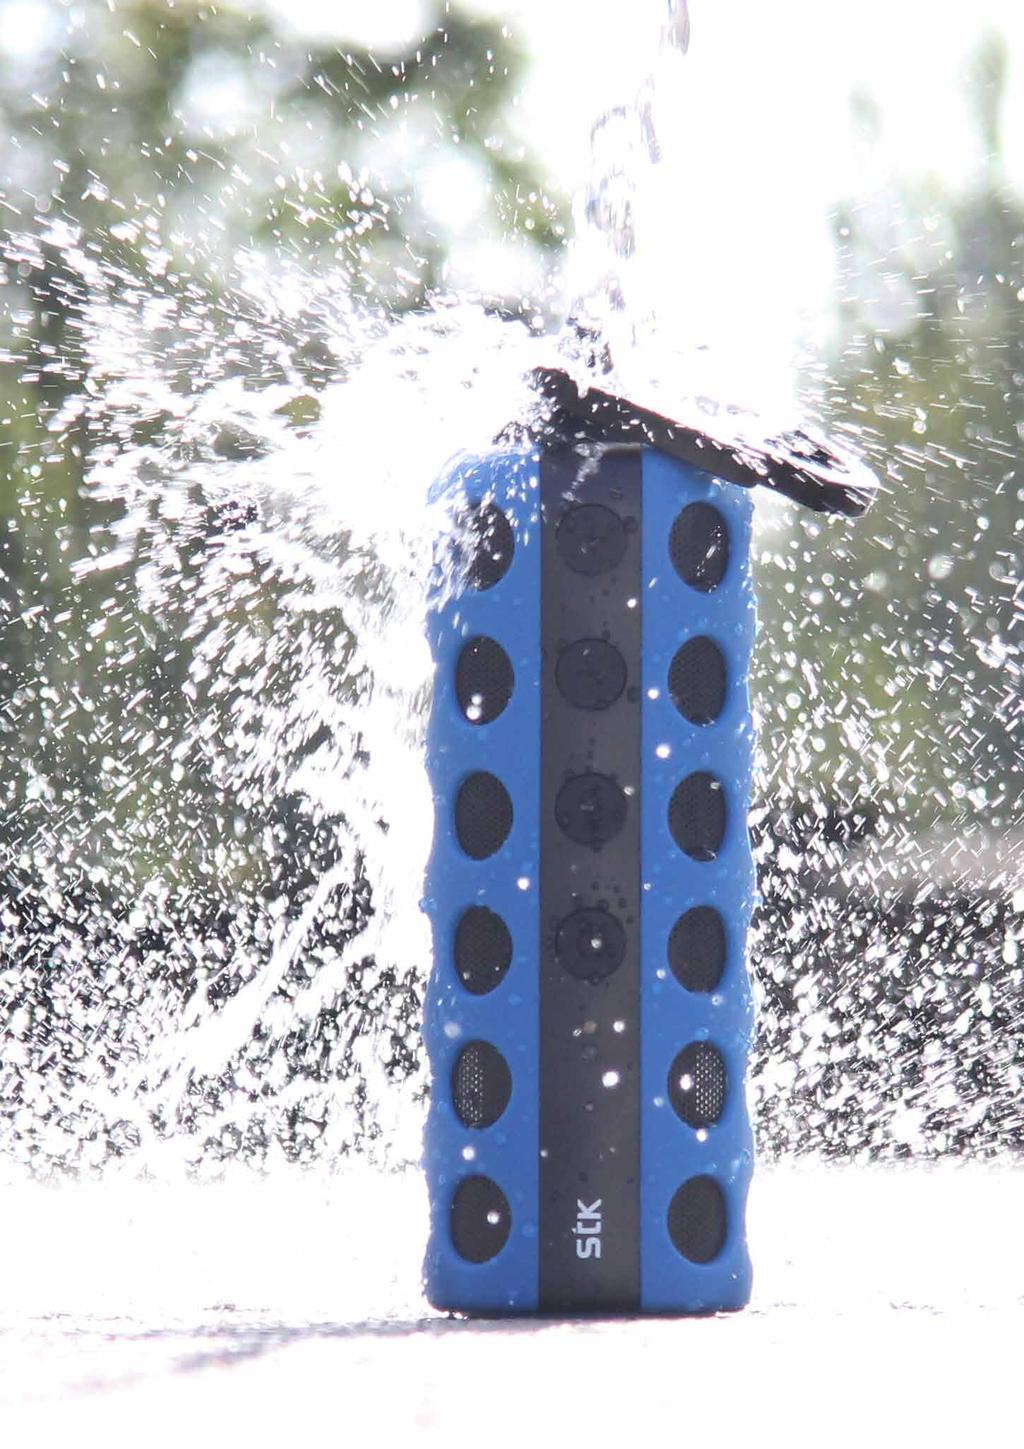 Bluetooth Carabiner Bottle opener Splashproof Universal flasko bluetooth speaker IPX5 Splashproof, rugged and complete with a carabiner for hands-free